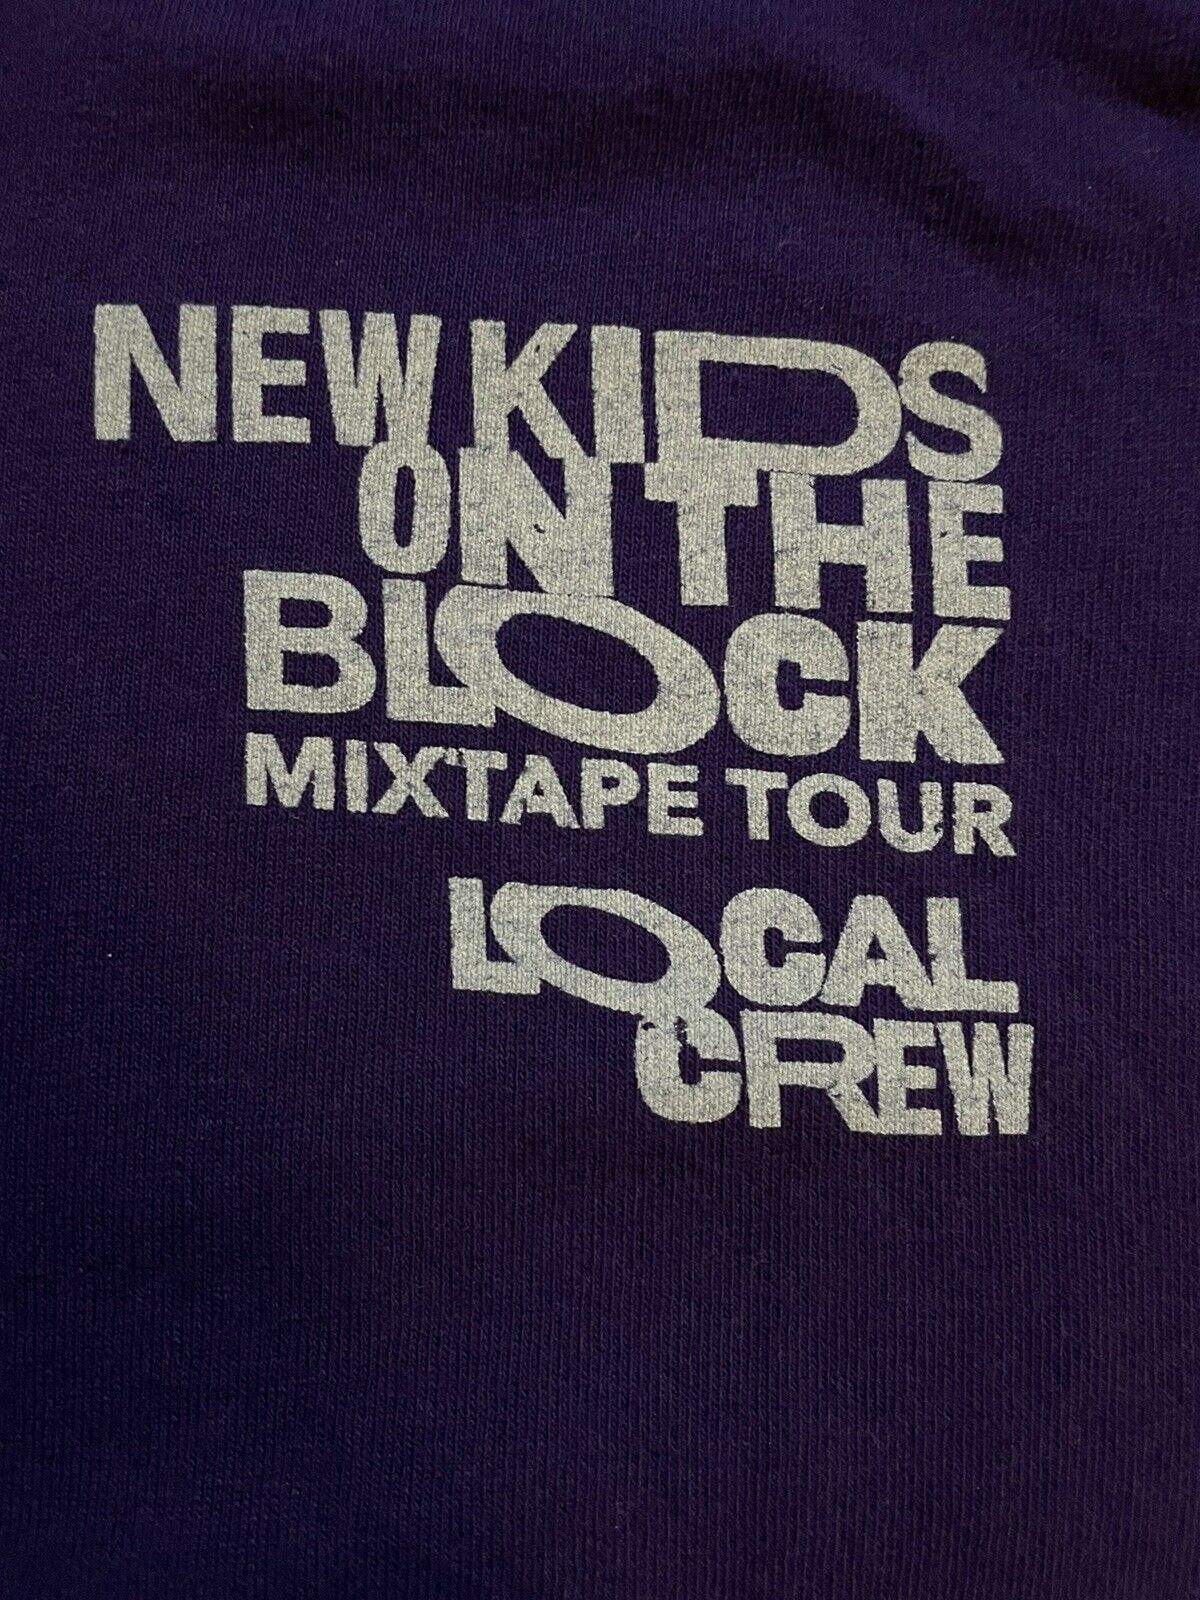 New Kids On The Block Mixtape Tour Local Crew Shirt Nkotb Purple Gildan Xl